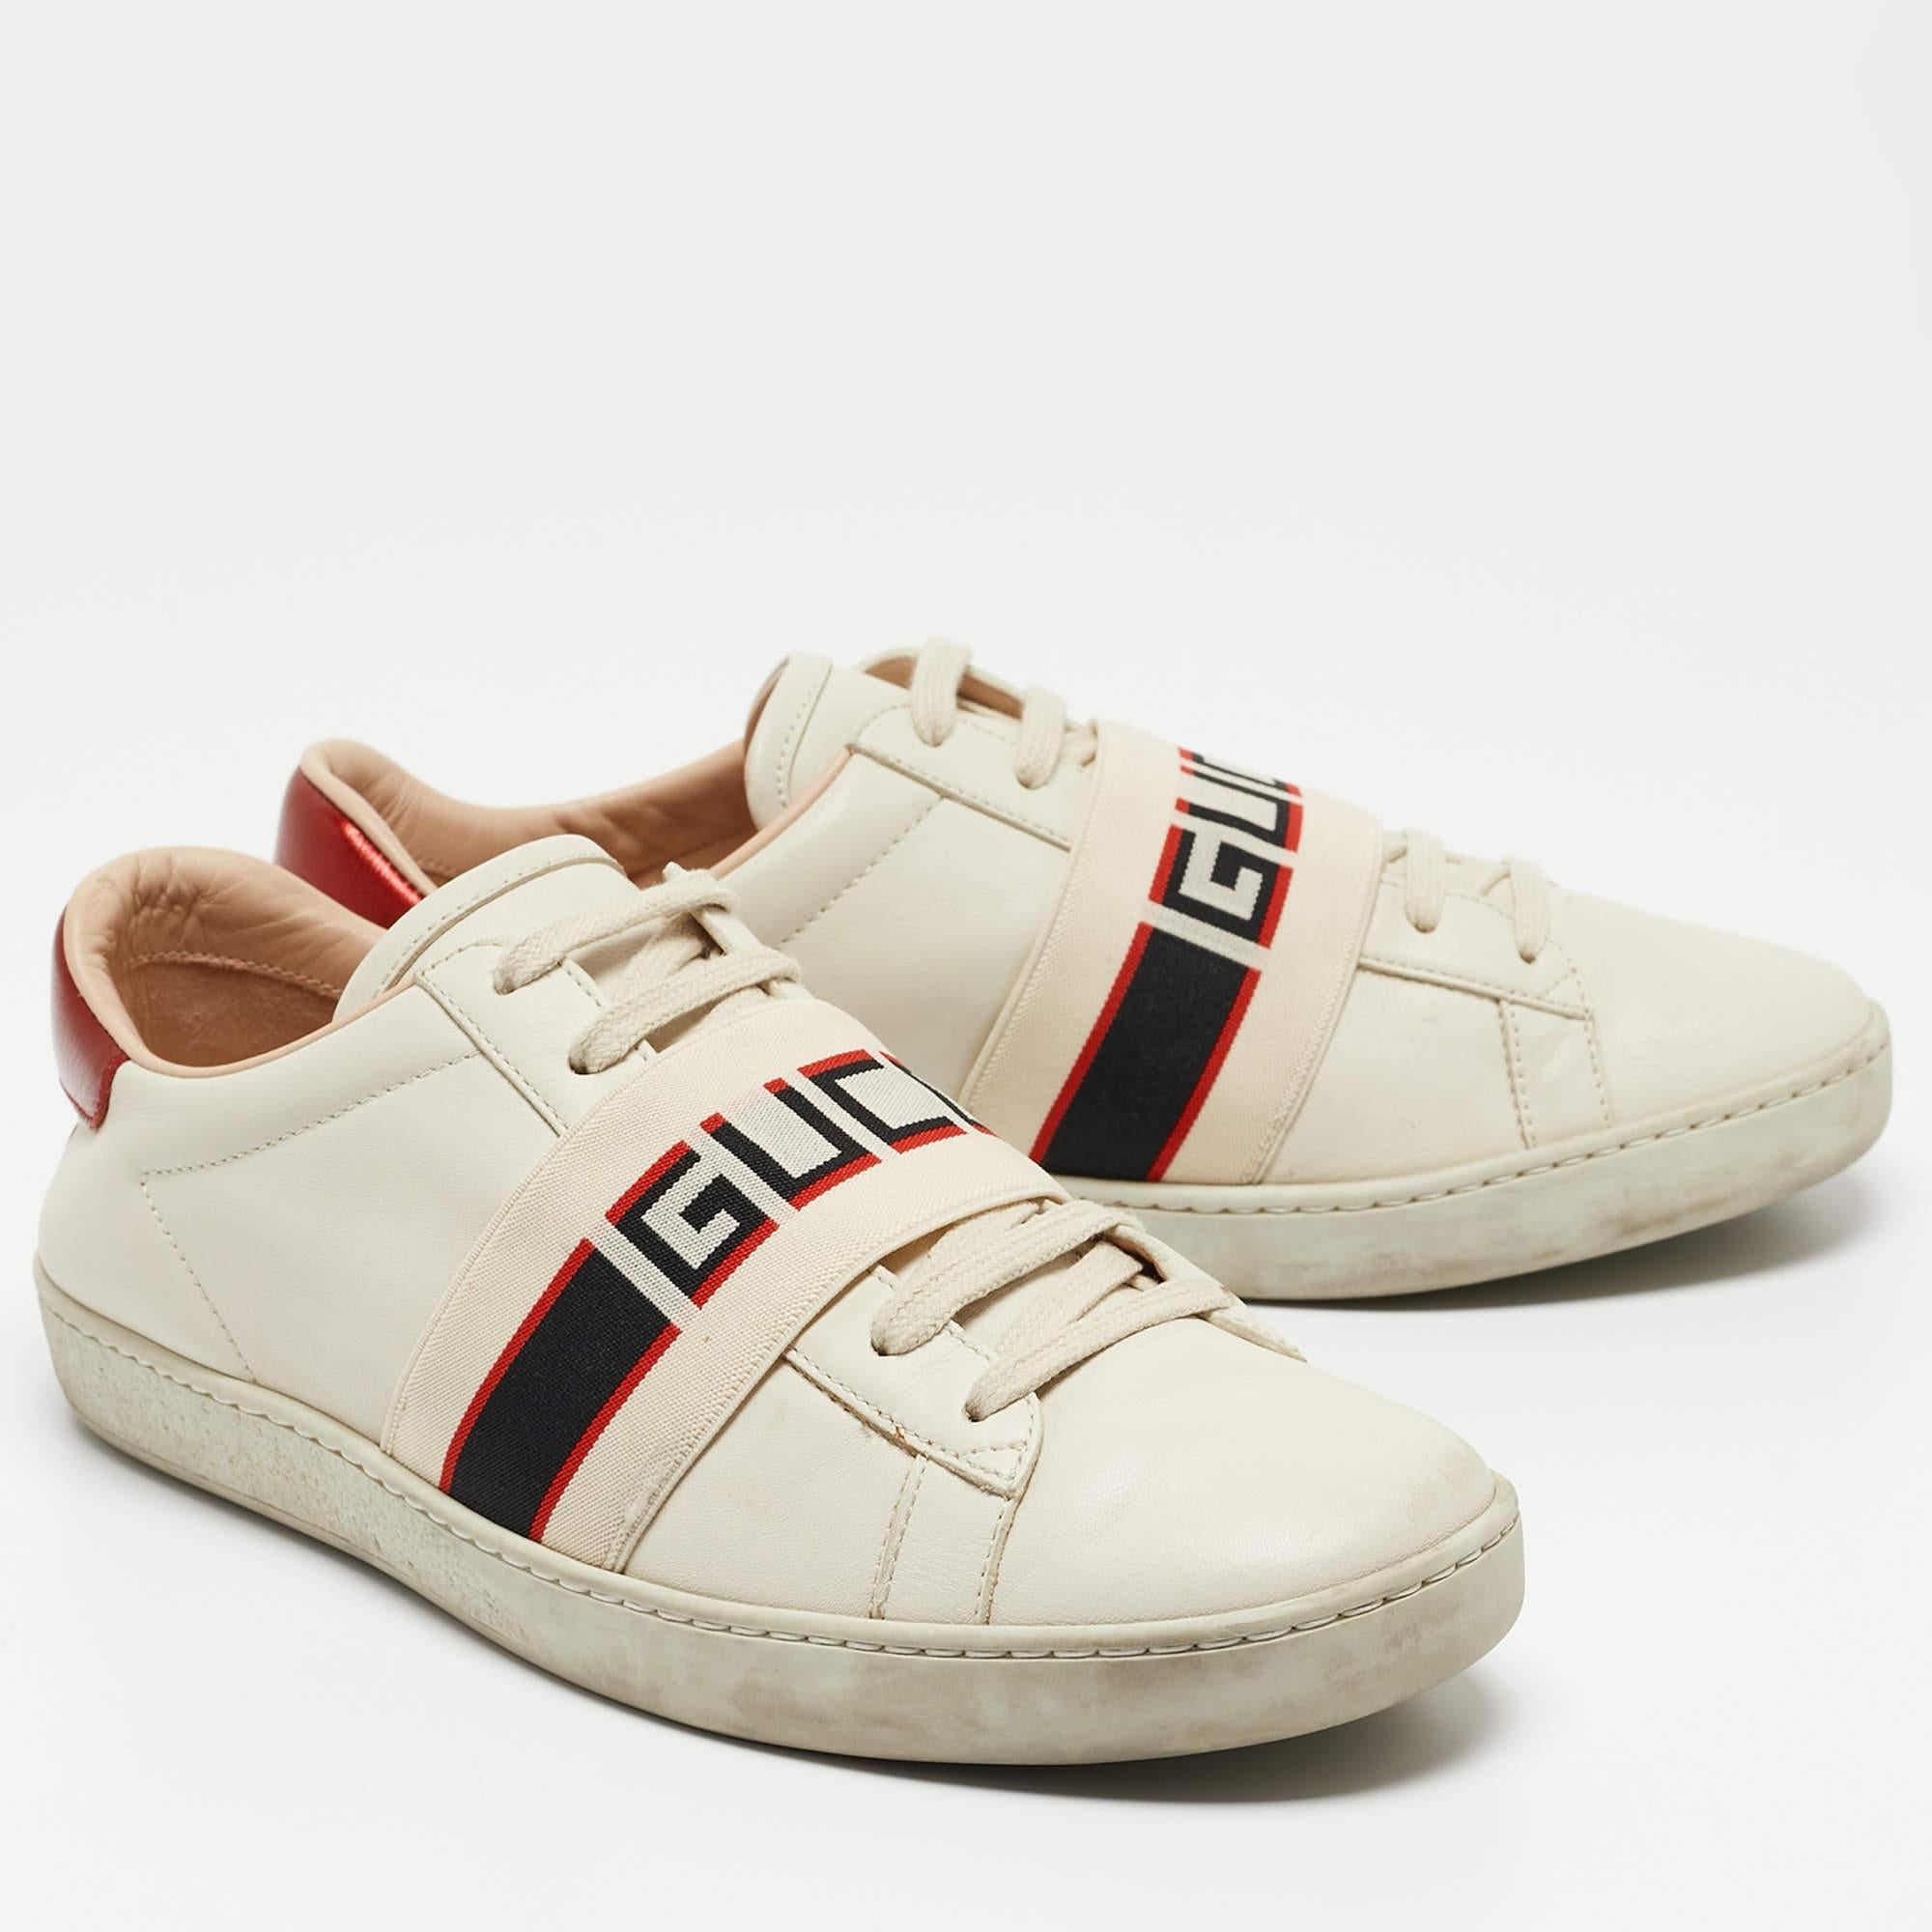 Gucci Off White/Red Leather Ace Stripe Sneakers Size 39 In Good Condition For Sale In Dubai, Al Qouz 2